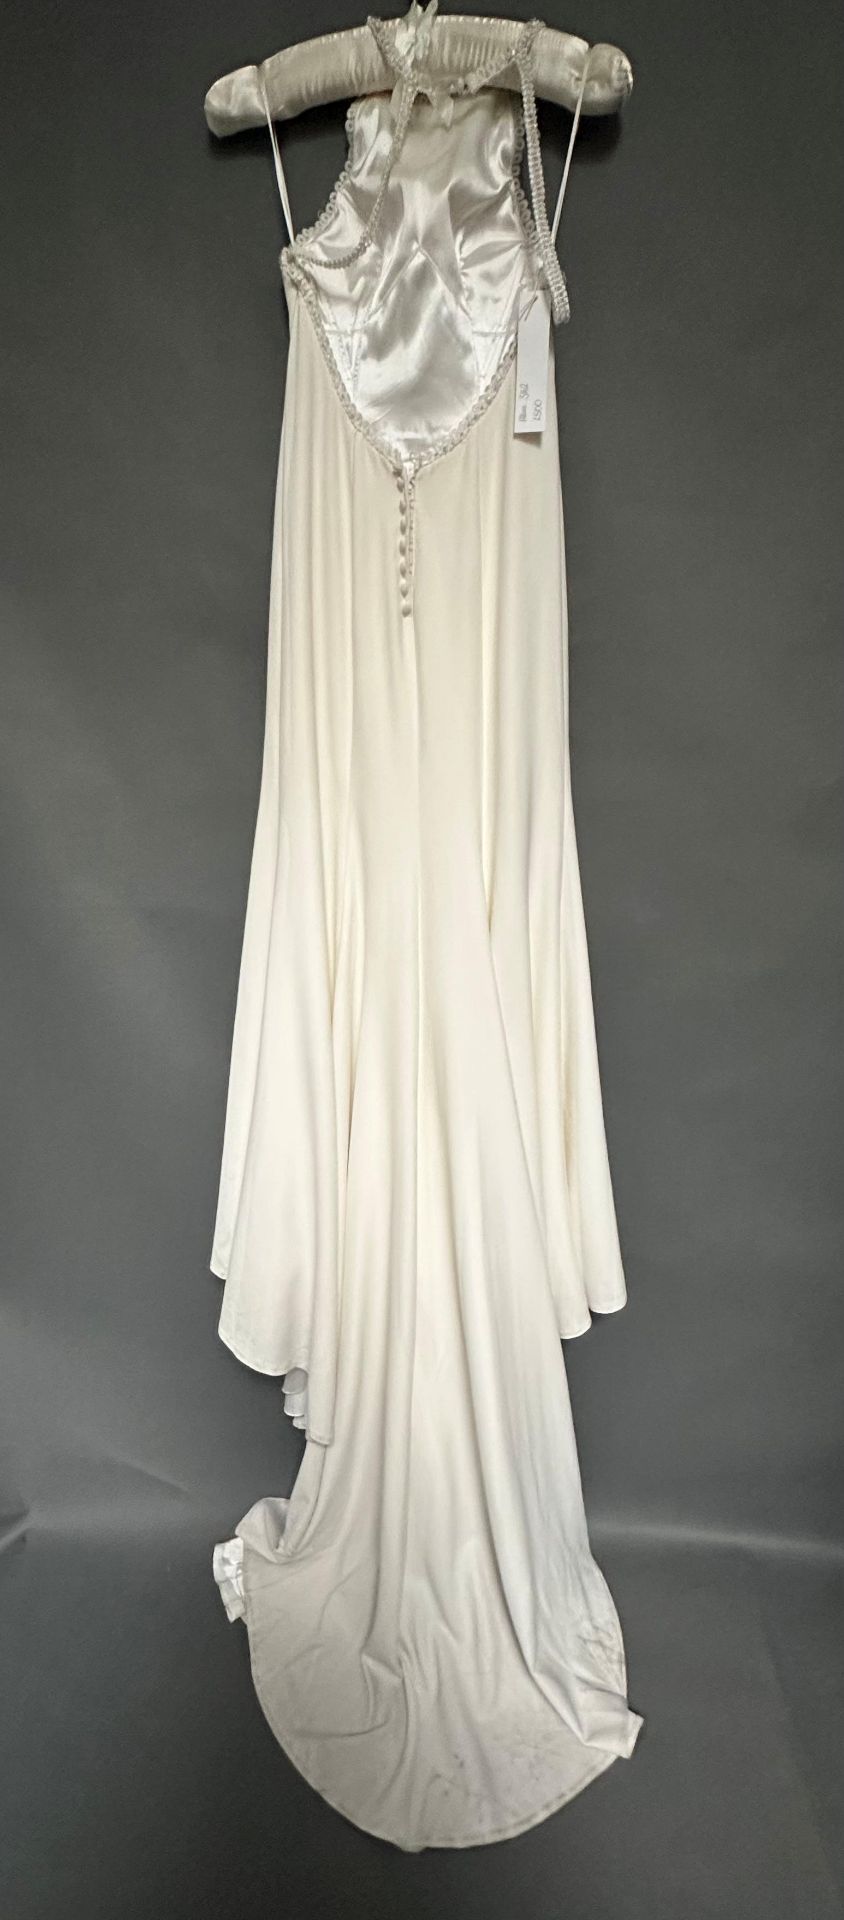 1 x REBECCA INGRAM Silk Crepe, Beaded Designer Wedding Dress Bridal Gown RRP £1,100 UK 12 - Image 4 of 5